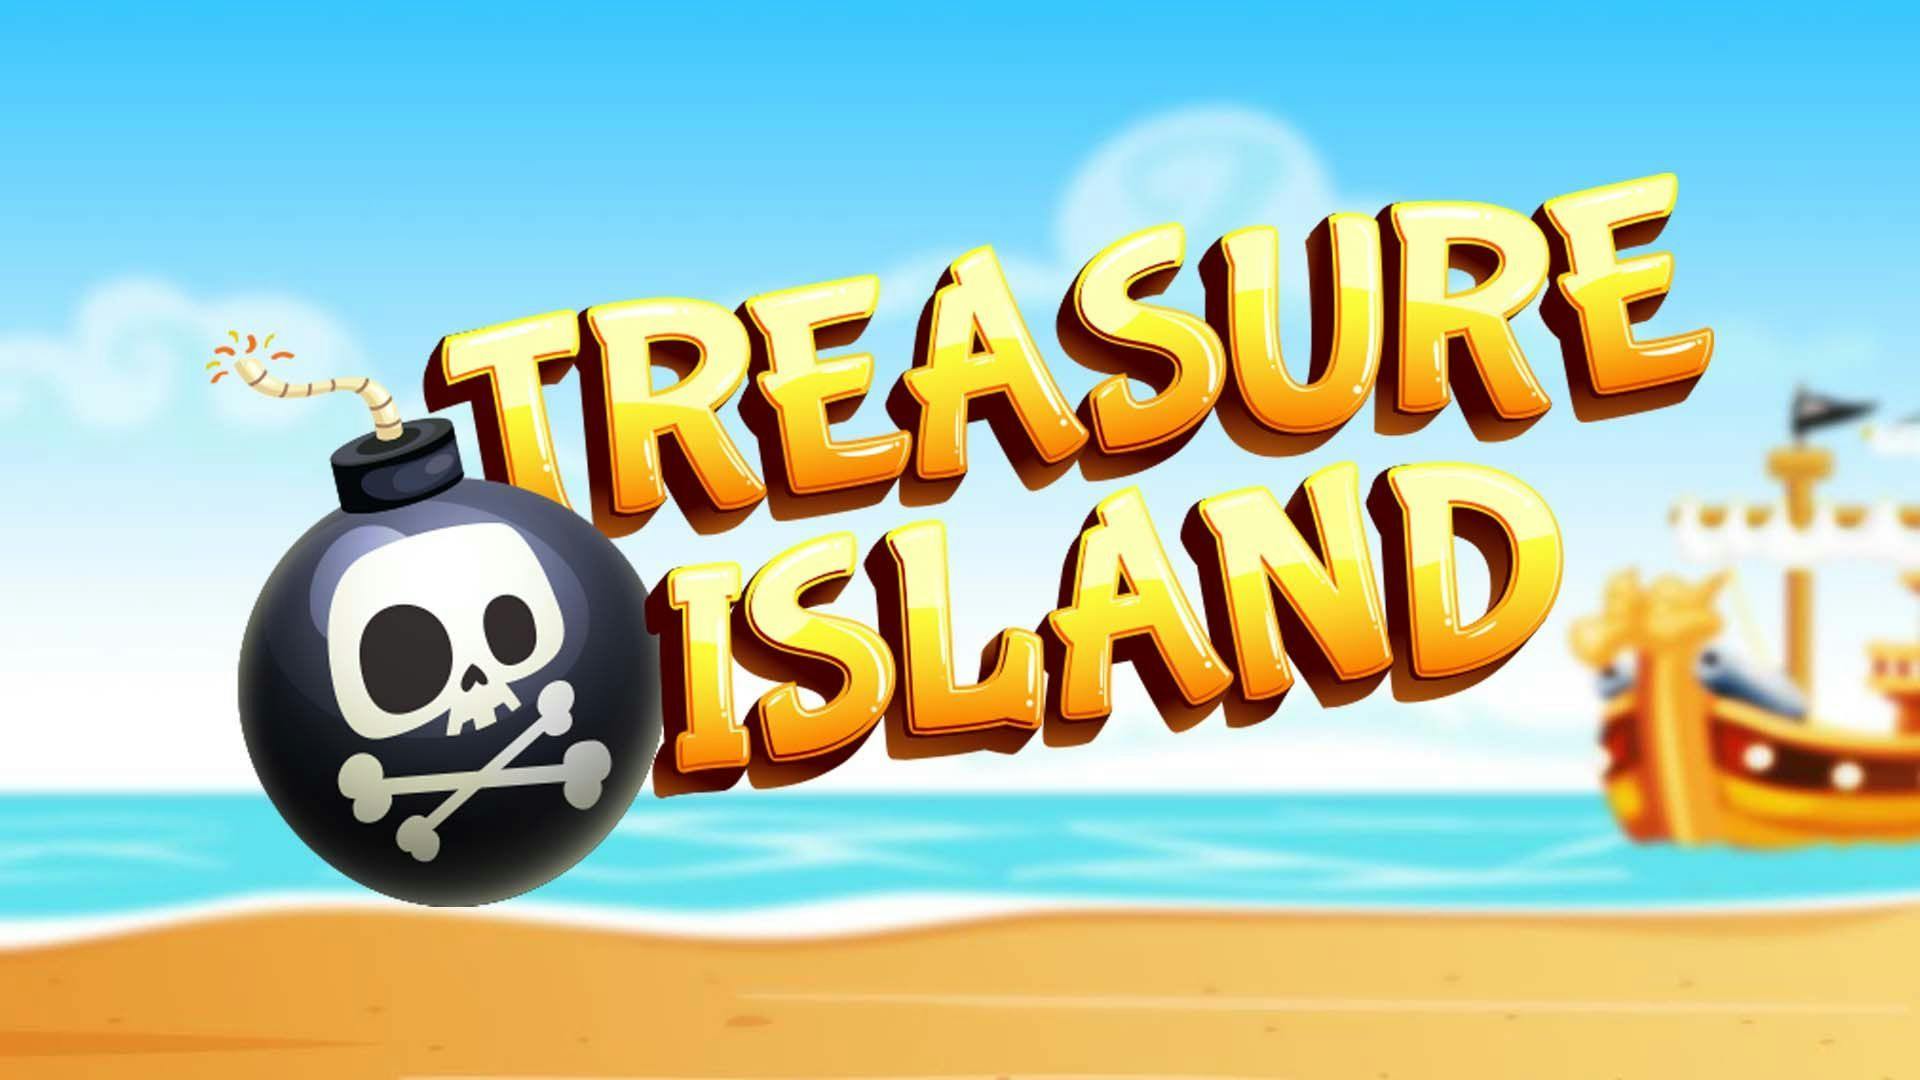 Treasure Island Slot Machine Online Free Game Play